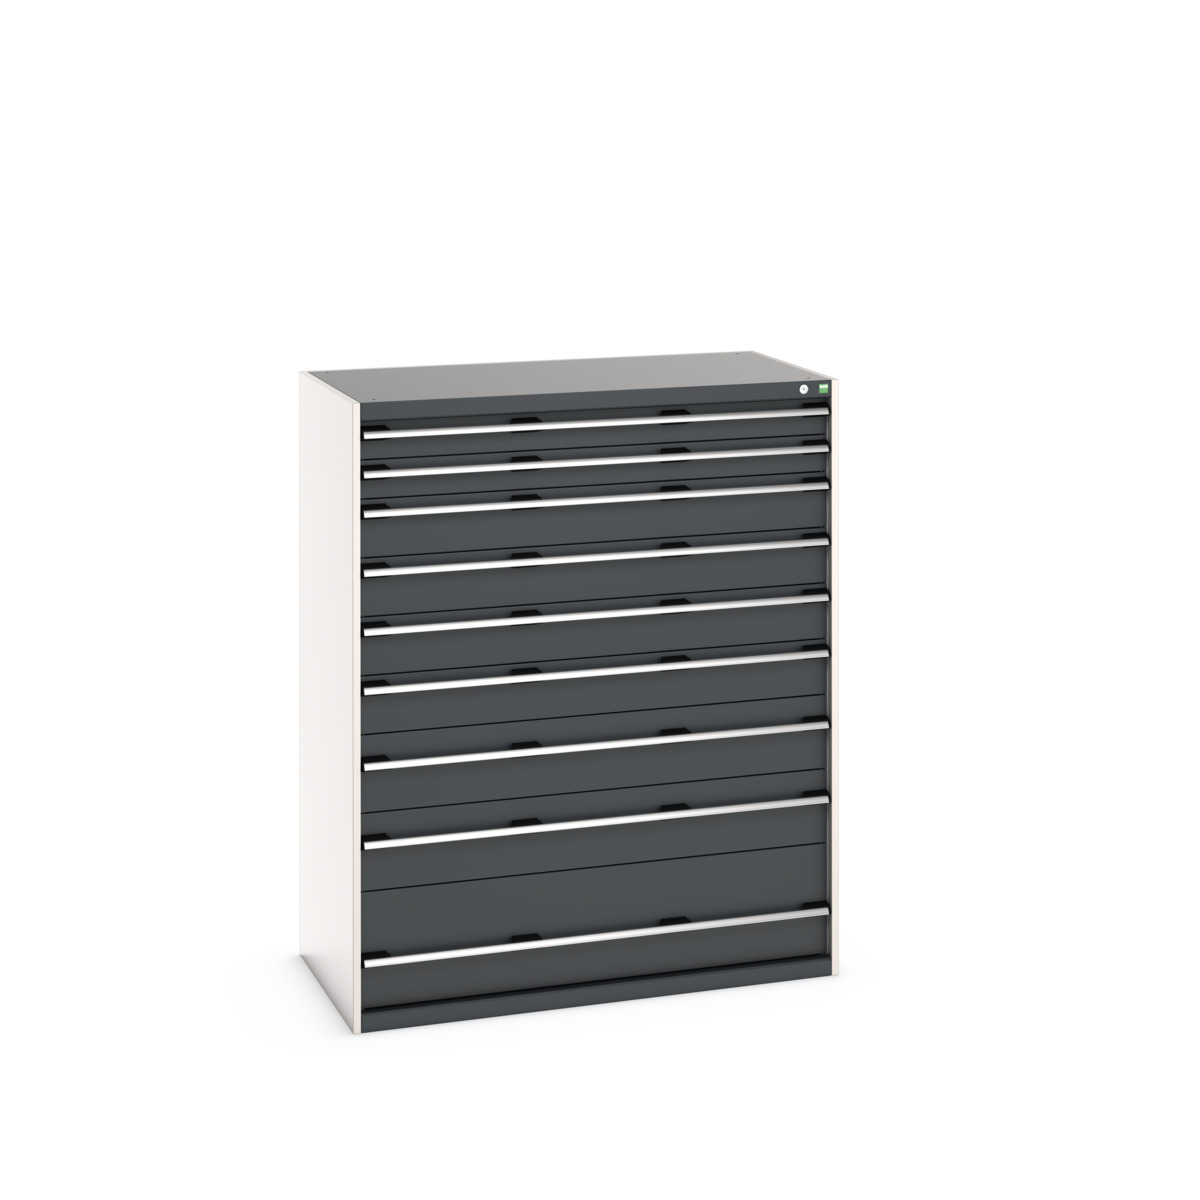 40030075. - cubio drawer cabinet